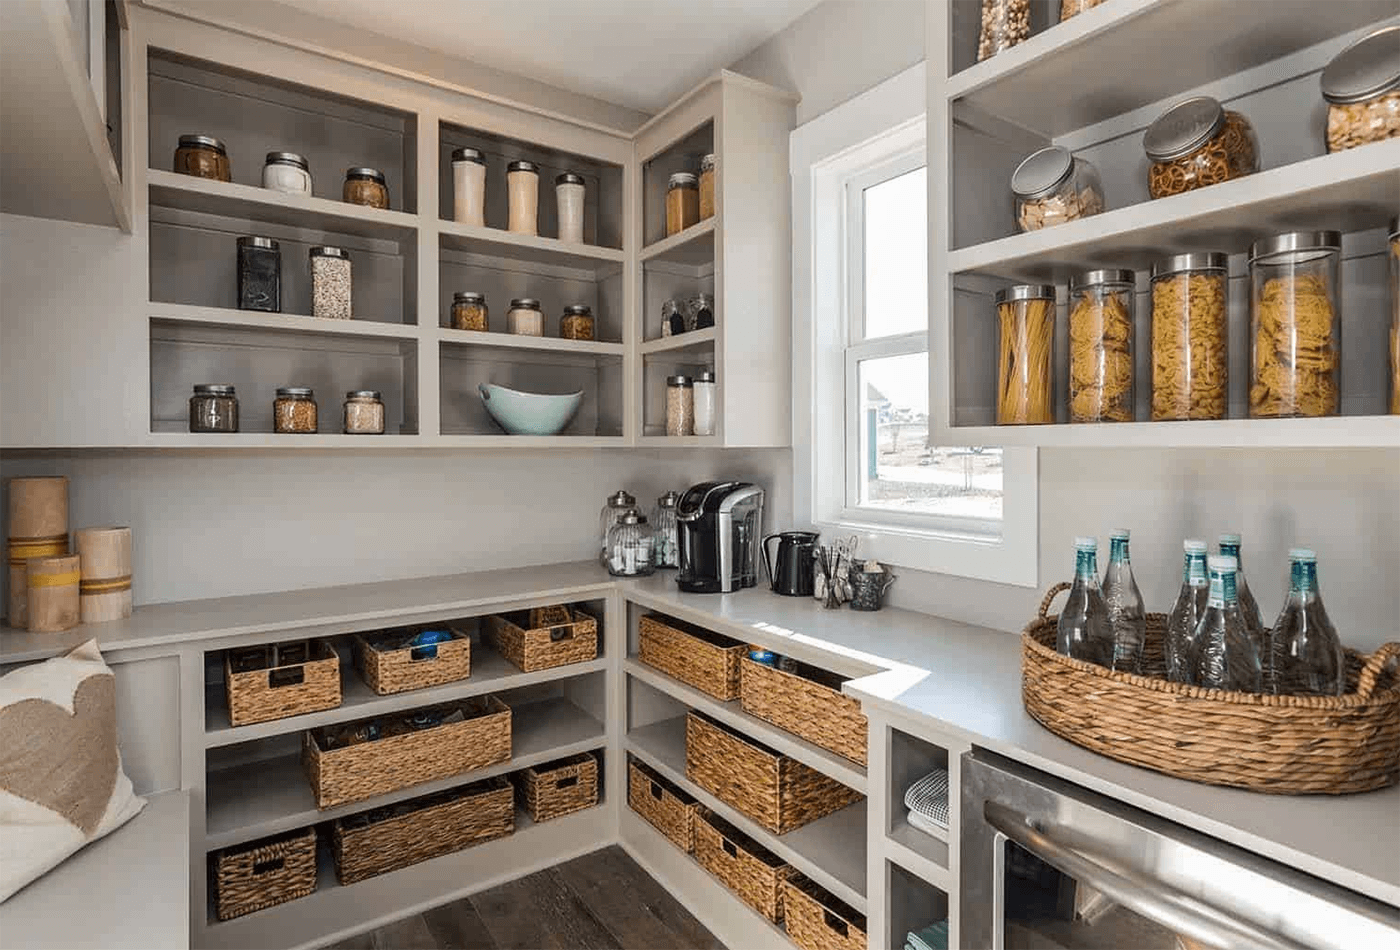 Pretty organized shelves  Kitchen pantry design, Pantry storage, Pantry  design